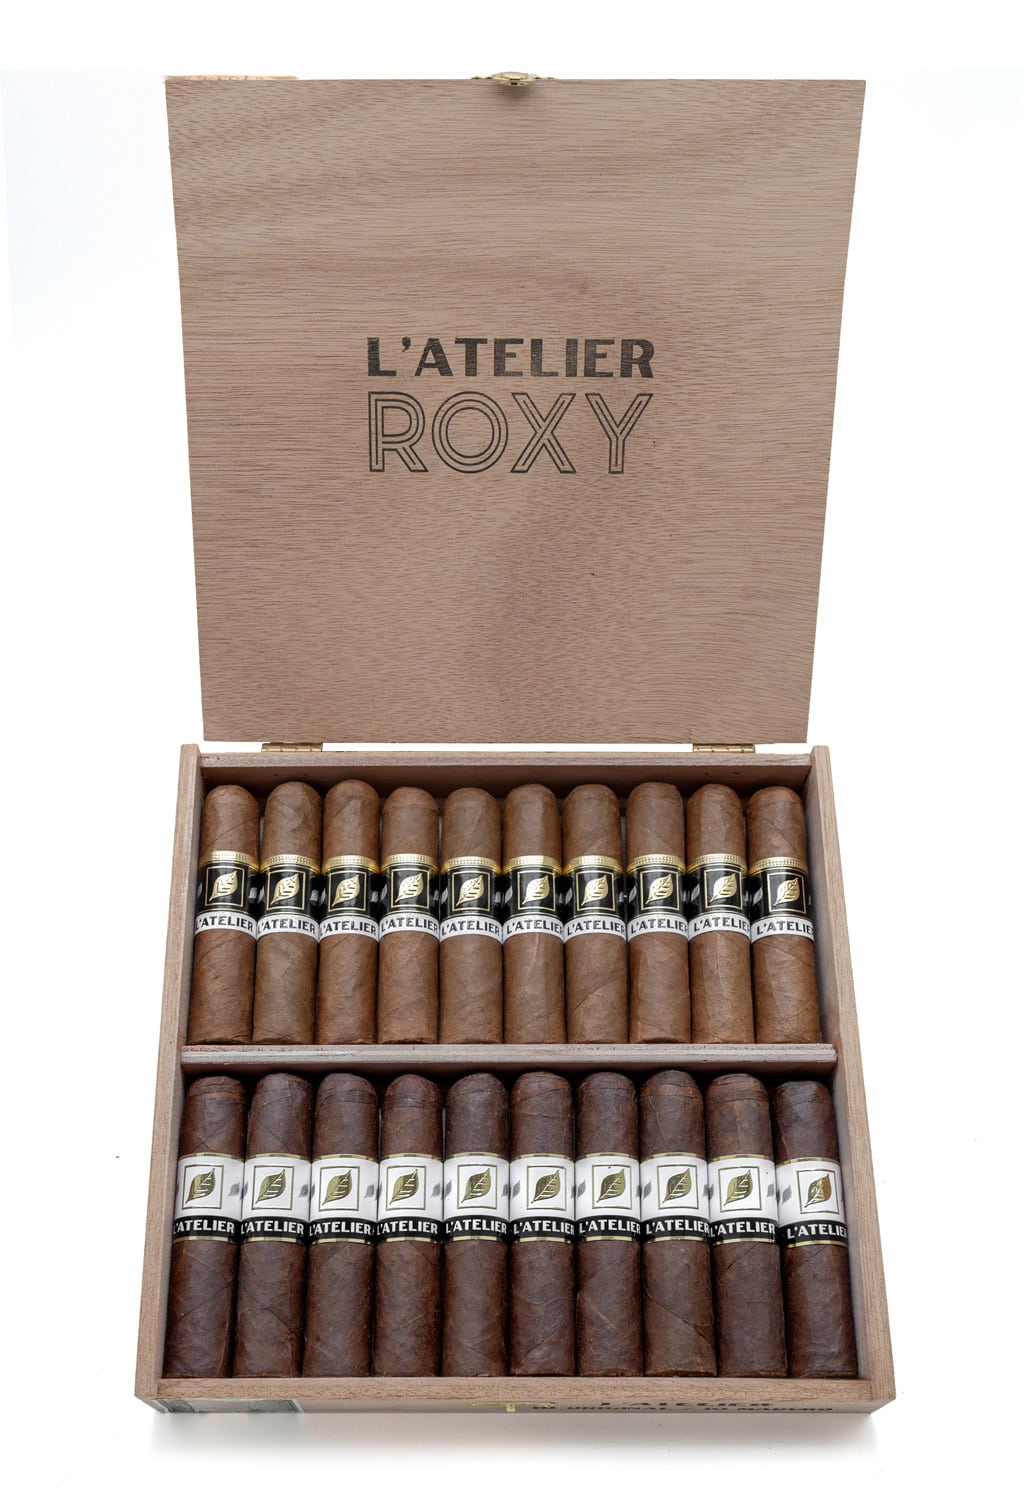 L'Atelier Imports Roxy cigars